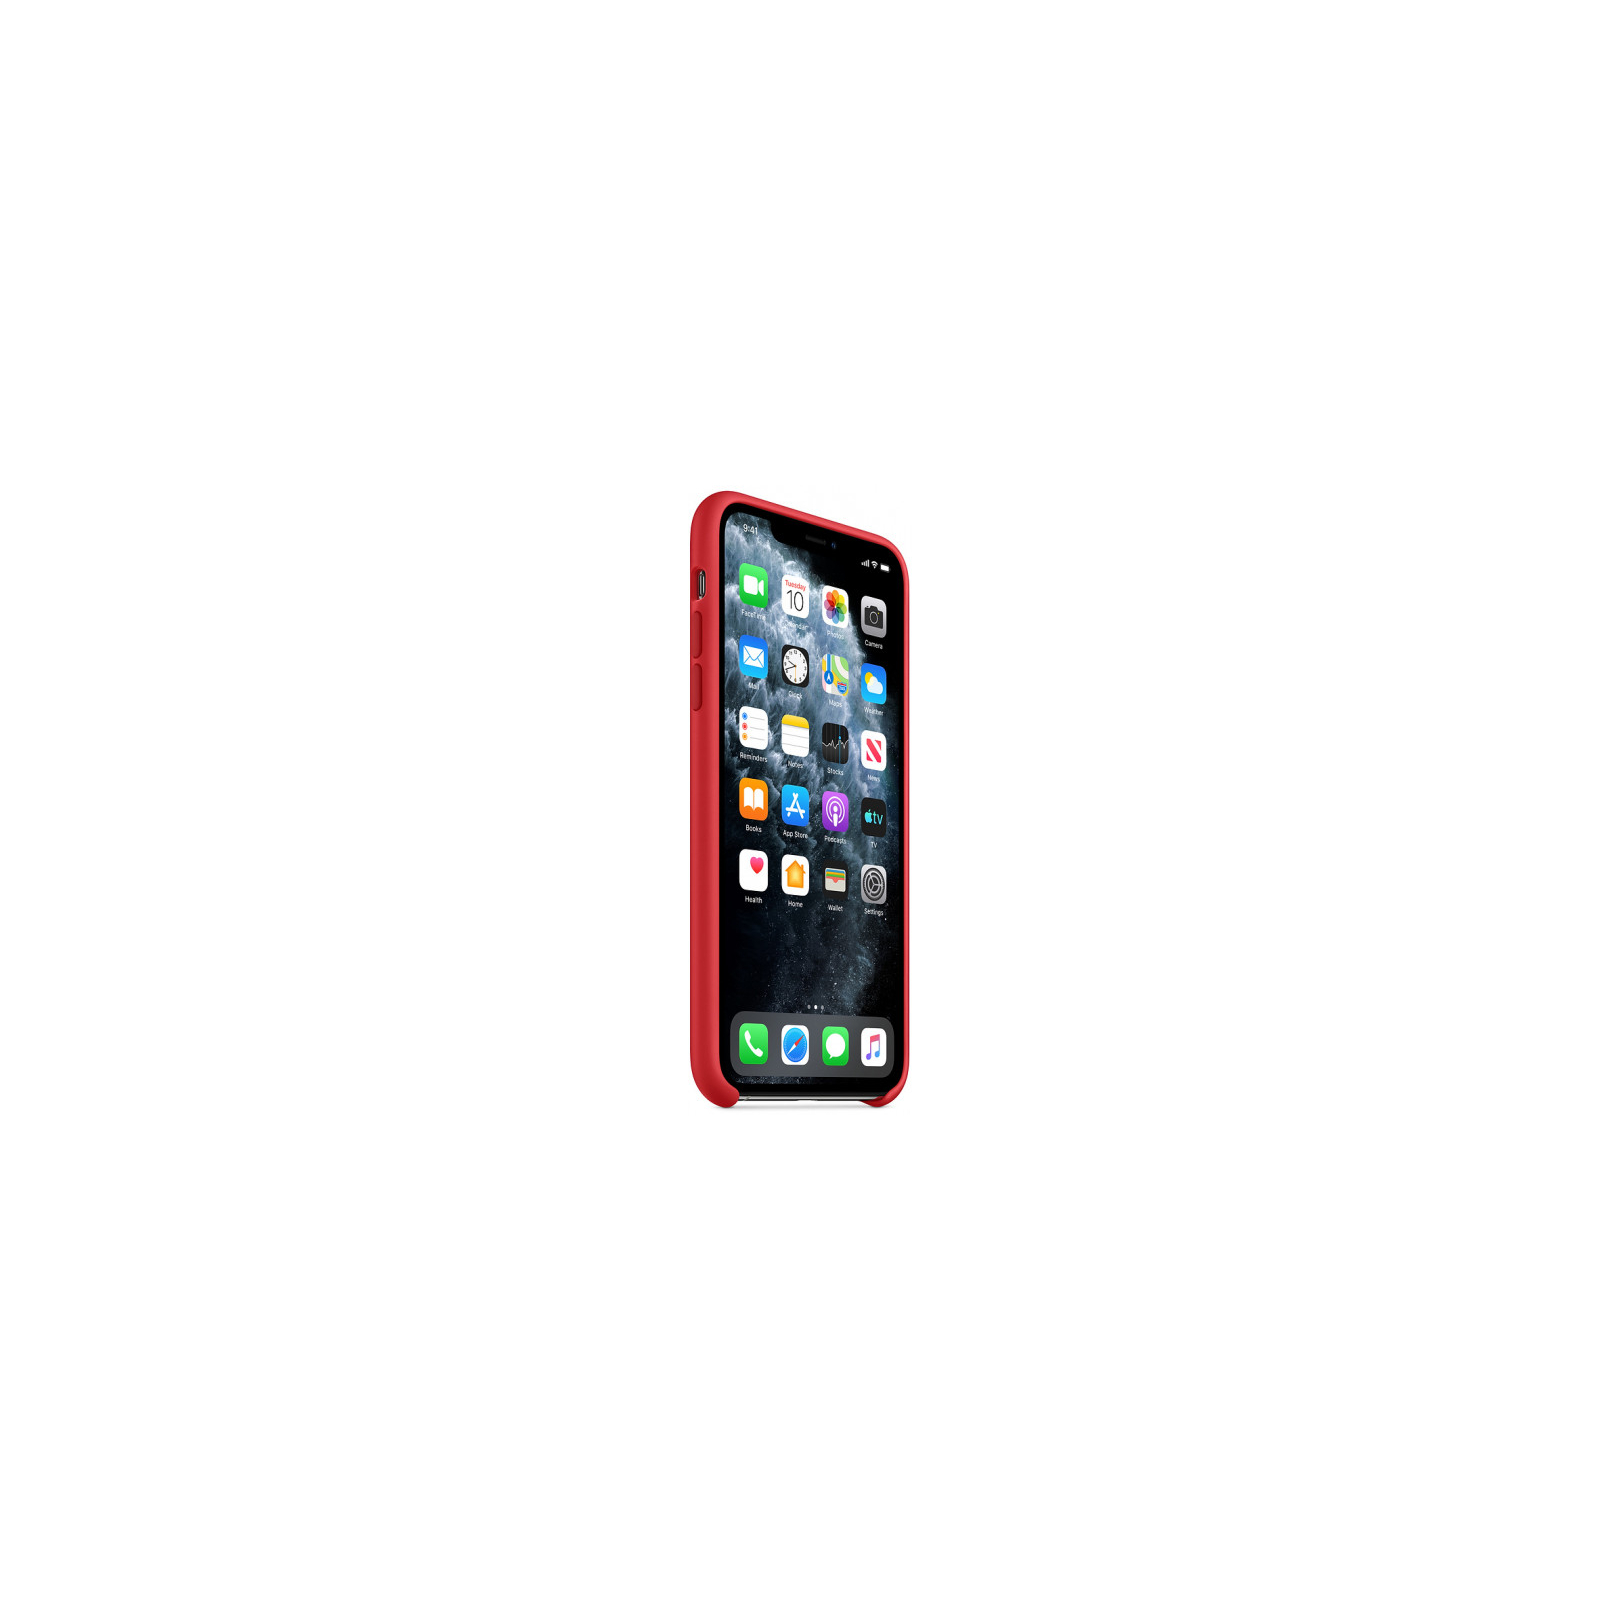 Чехол для мобильного телефона Apple iPhone 11 Pro Max Silicone Case - (PRODUCT)RED (MWYV2ZM/A) изображение 5